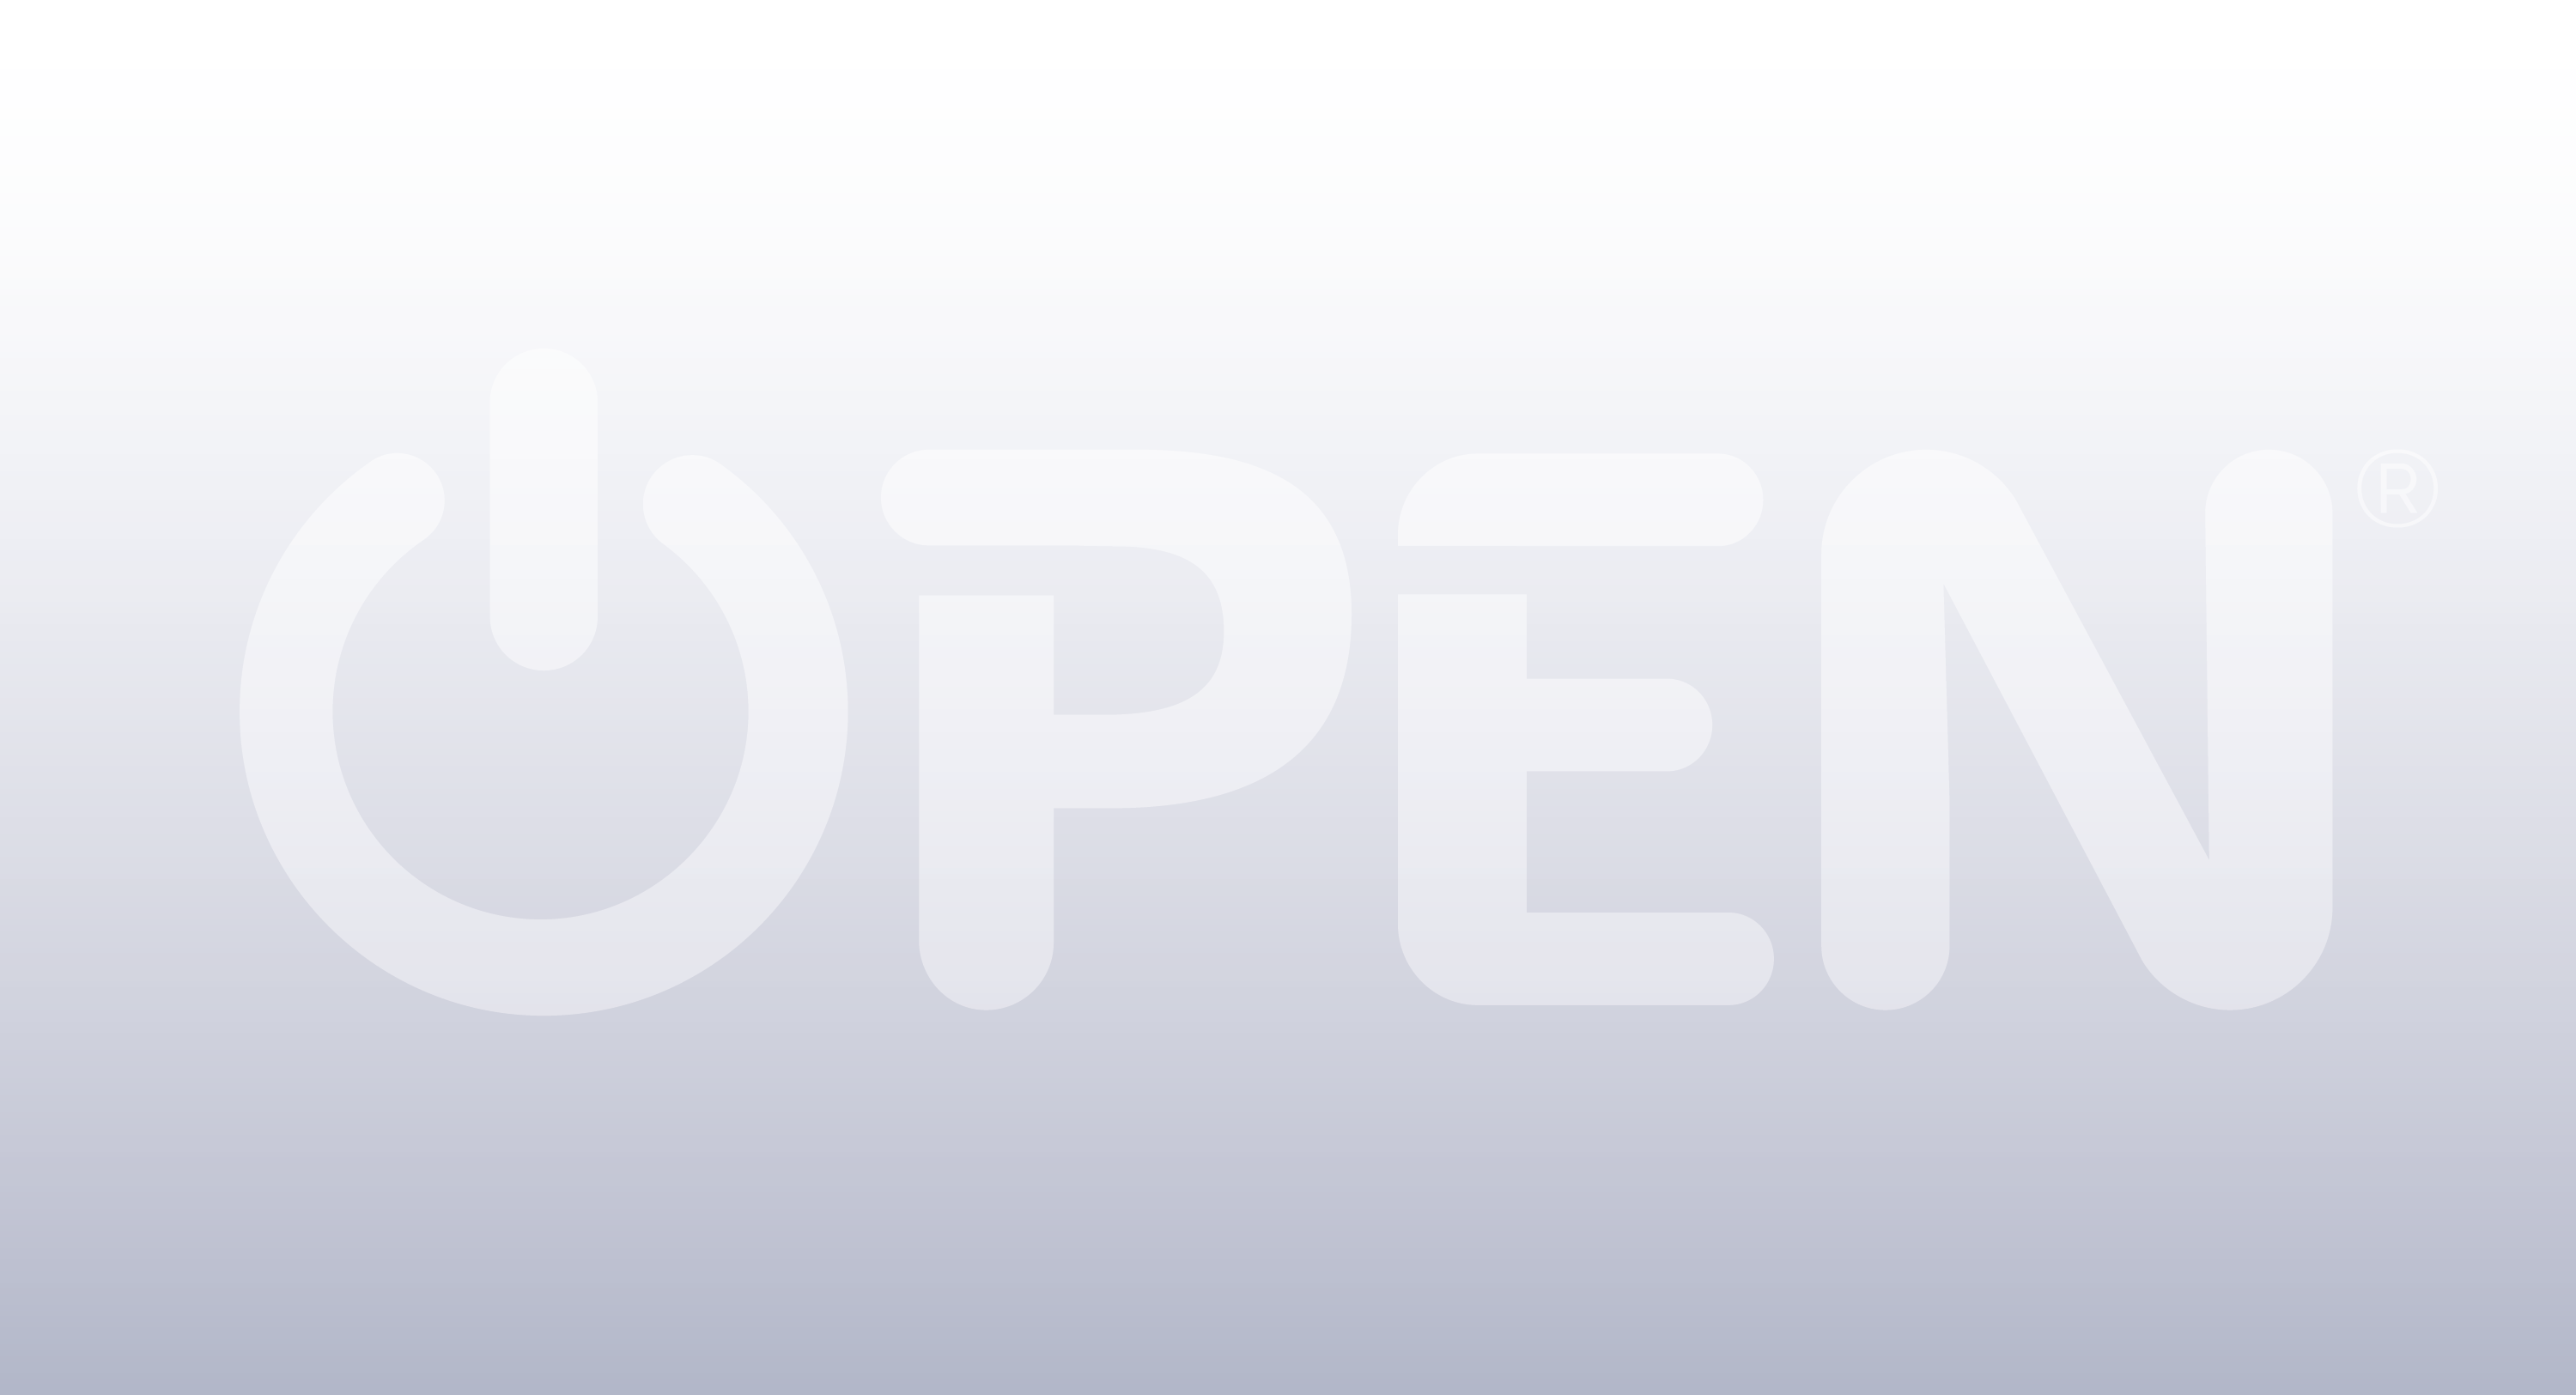 OPEN Background Logo